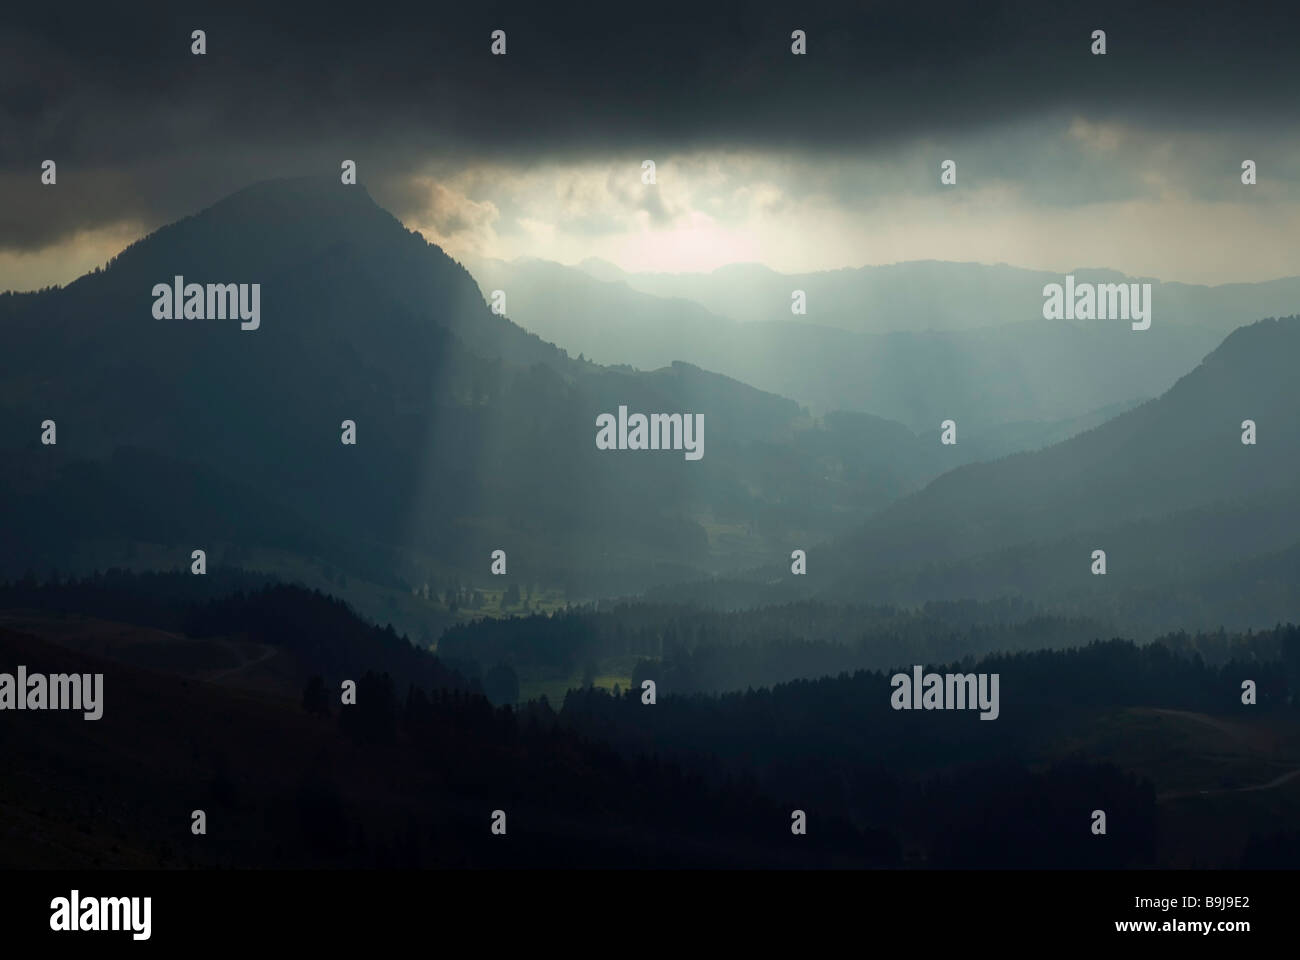 Mountain landscape with light curtain ahead of brewing storm, Appenzeller Alps, Kanton St. Gallen, Switzerland, Europe Stock Photo